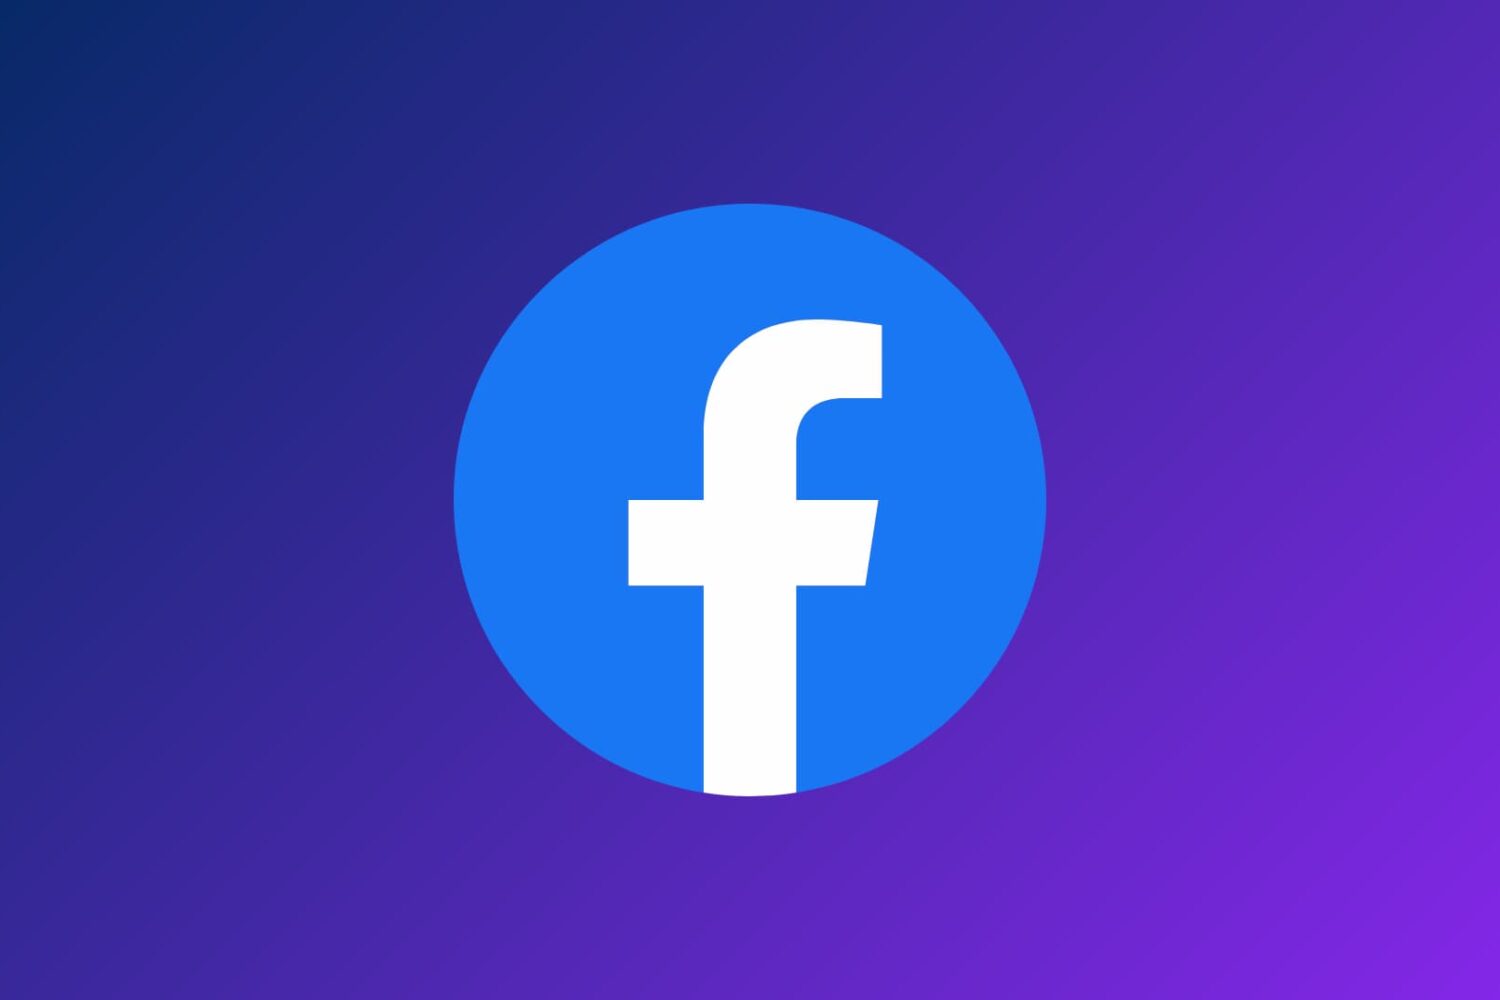 Facebook logo on a gradient background